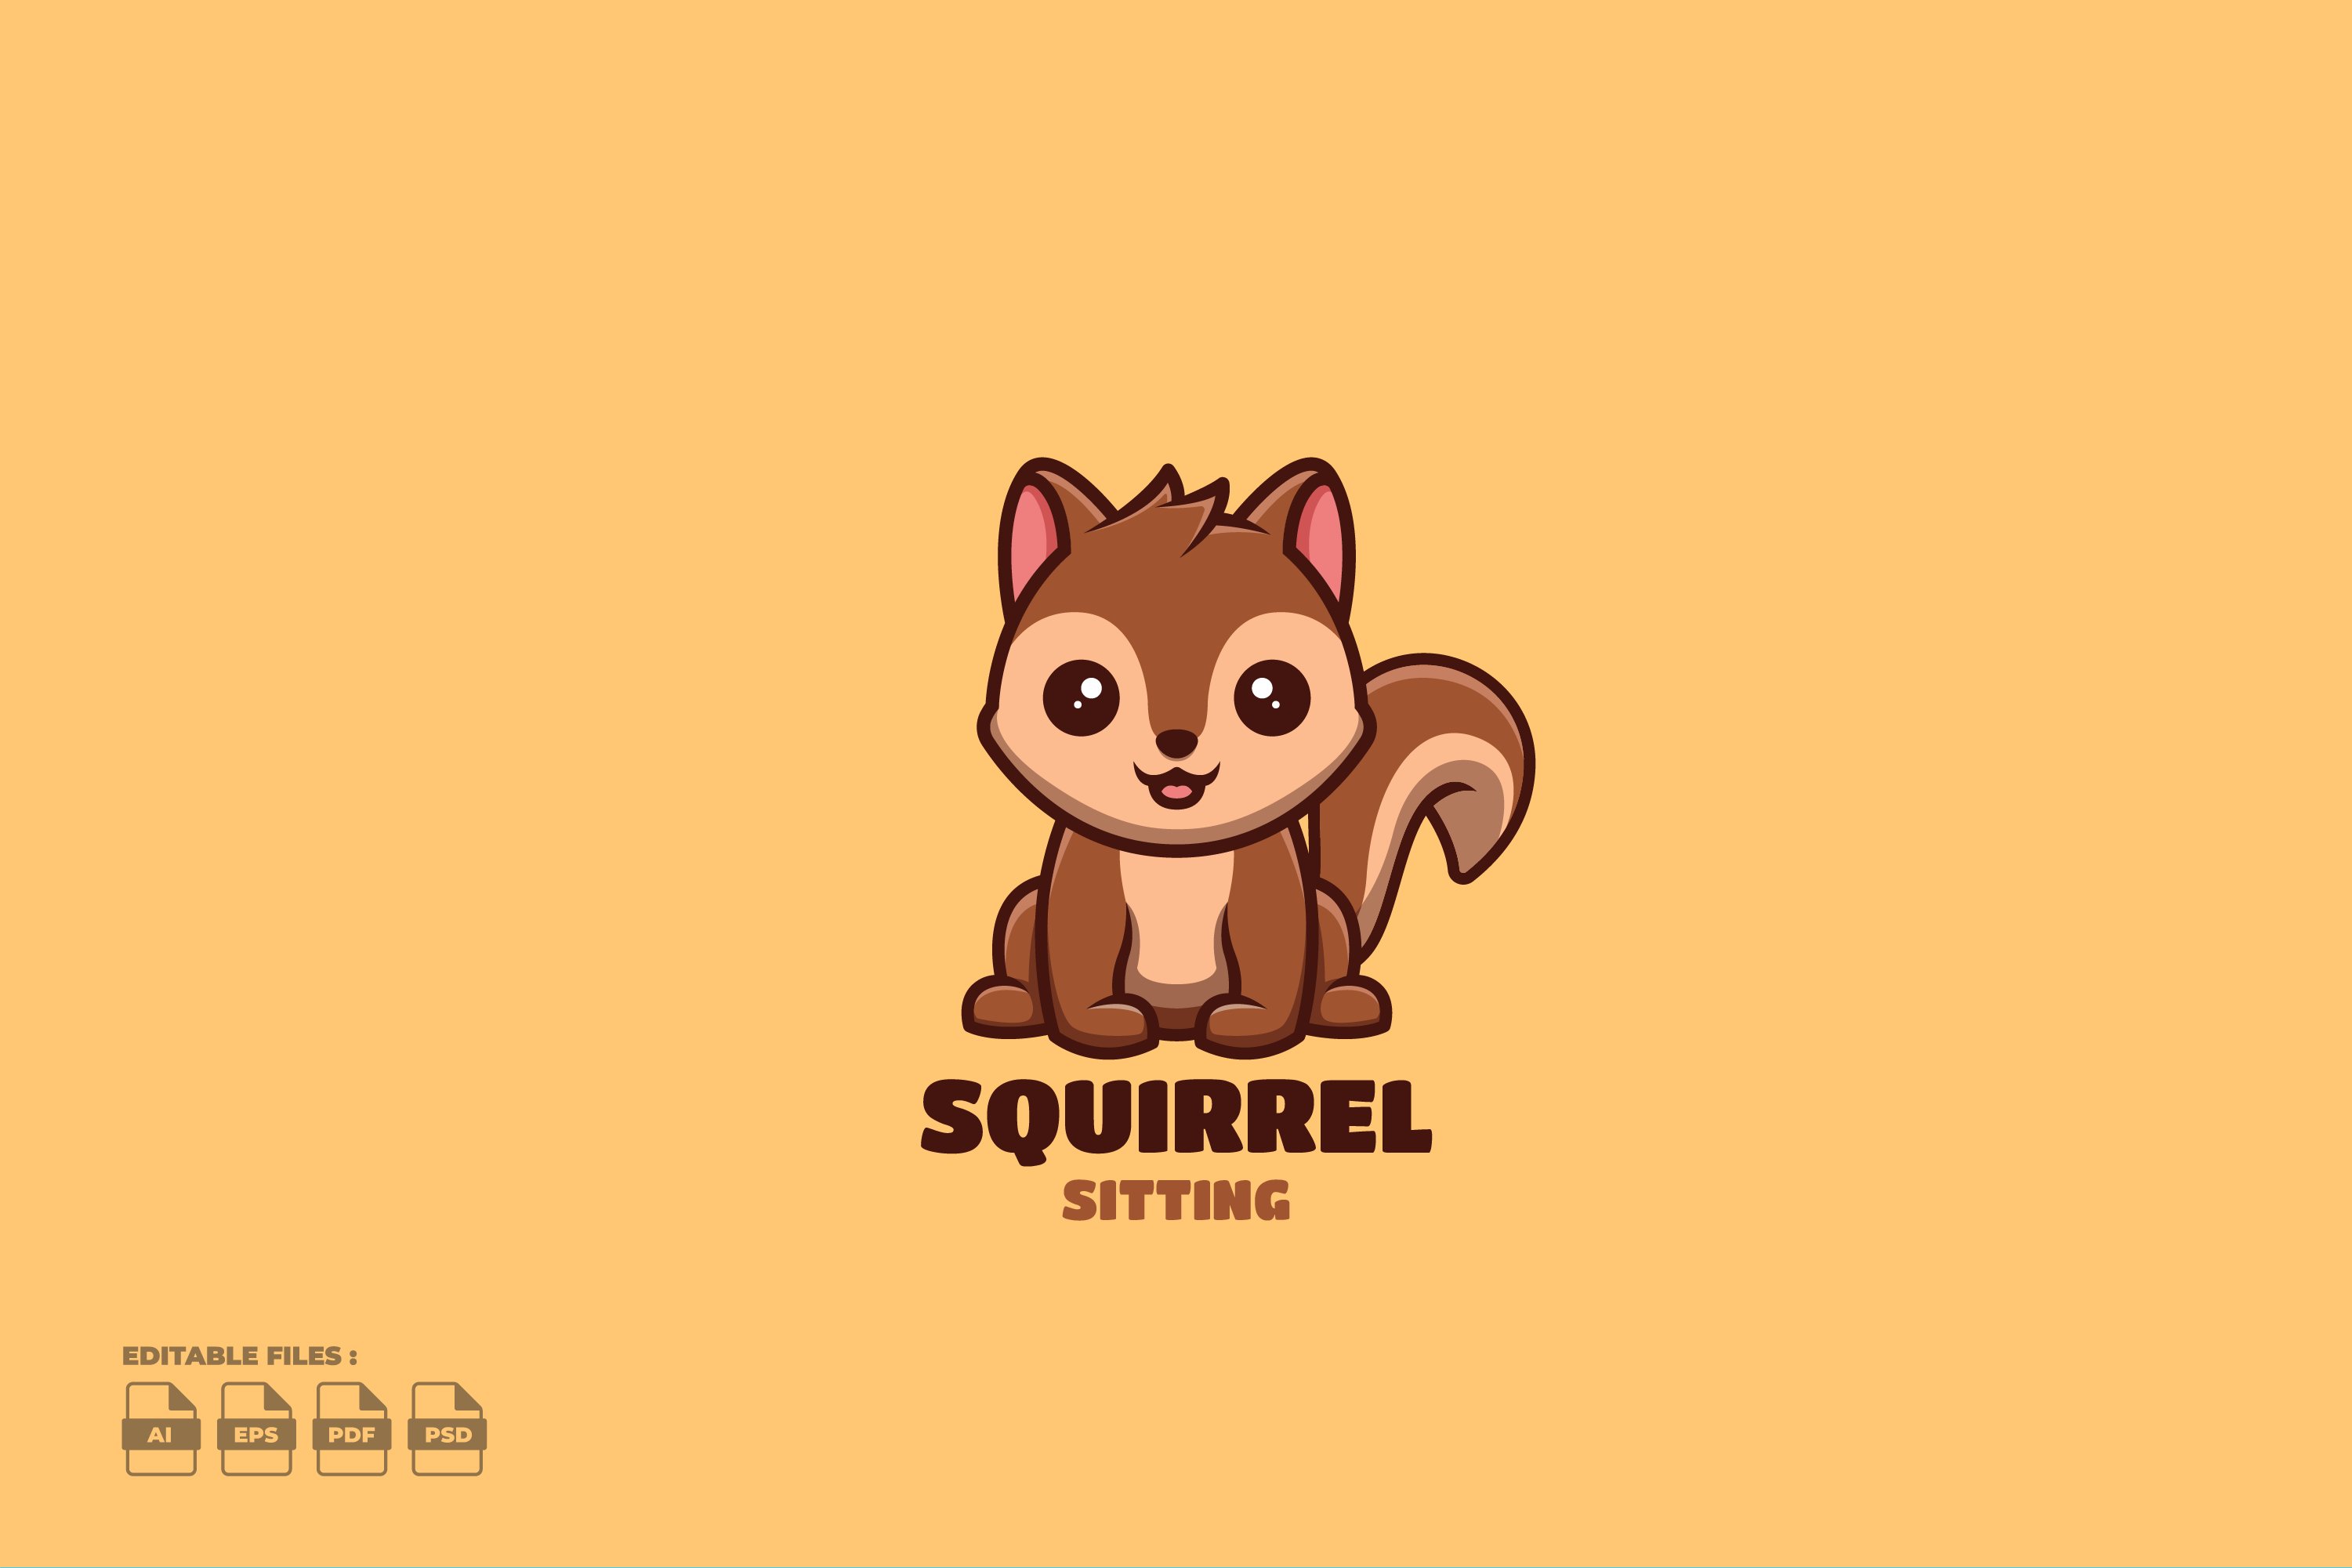 Sitting Squirrel Cute Mascot Logo cover image.